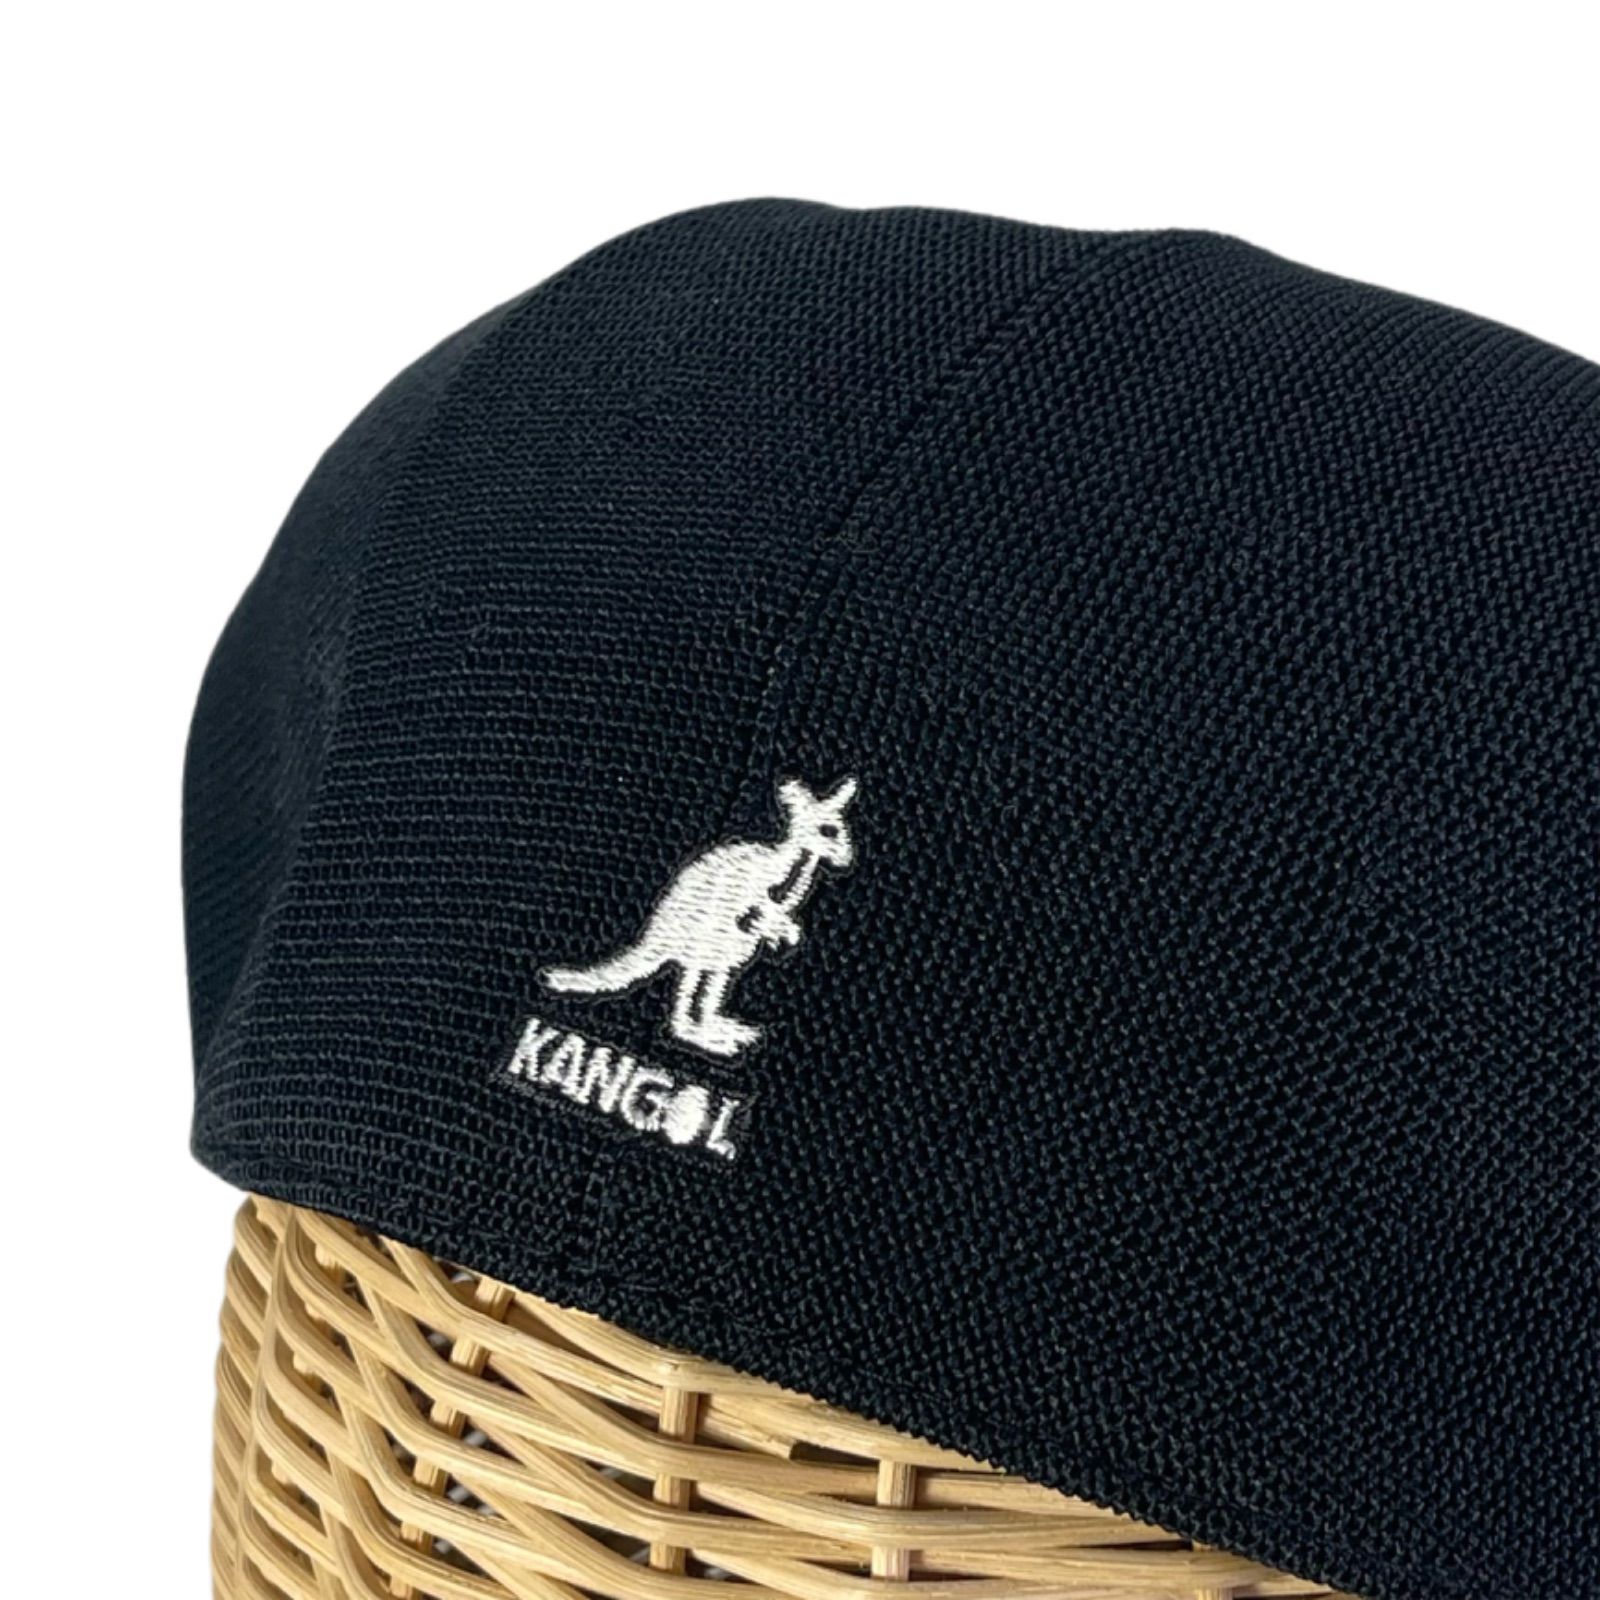 KANGOL Galaxy メッシュ素材 ハンチング帽 洗える帽子 Black/白ロゴ サイズ展開あり メルカリShops